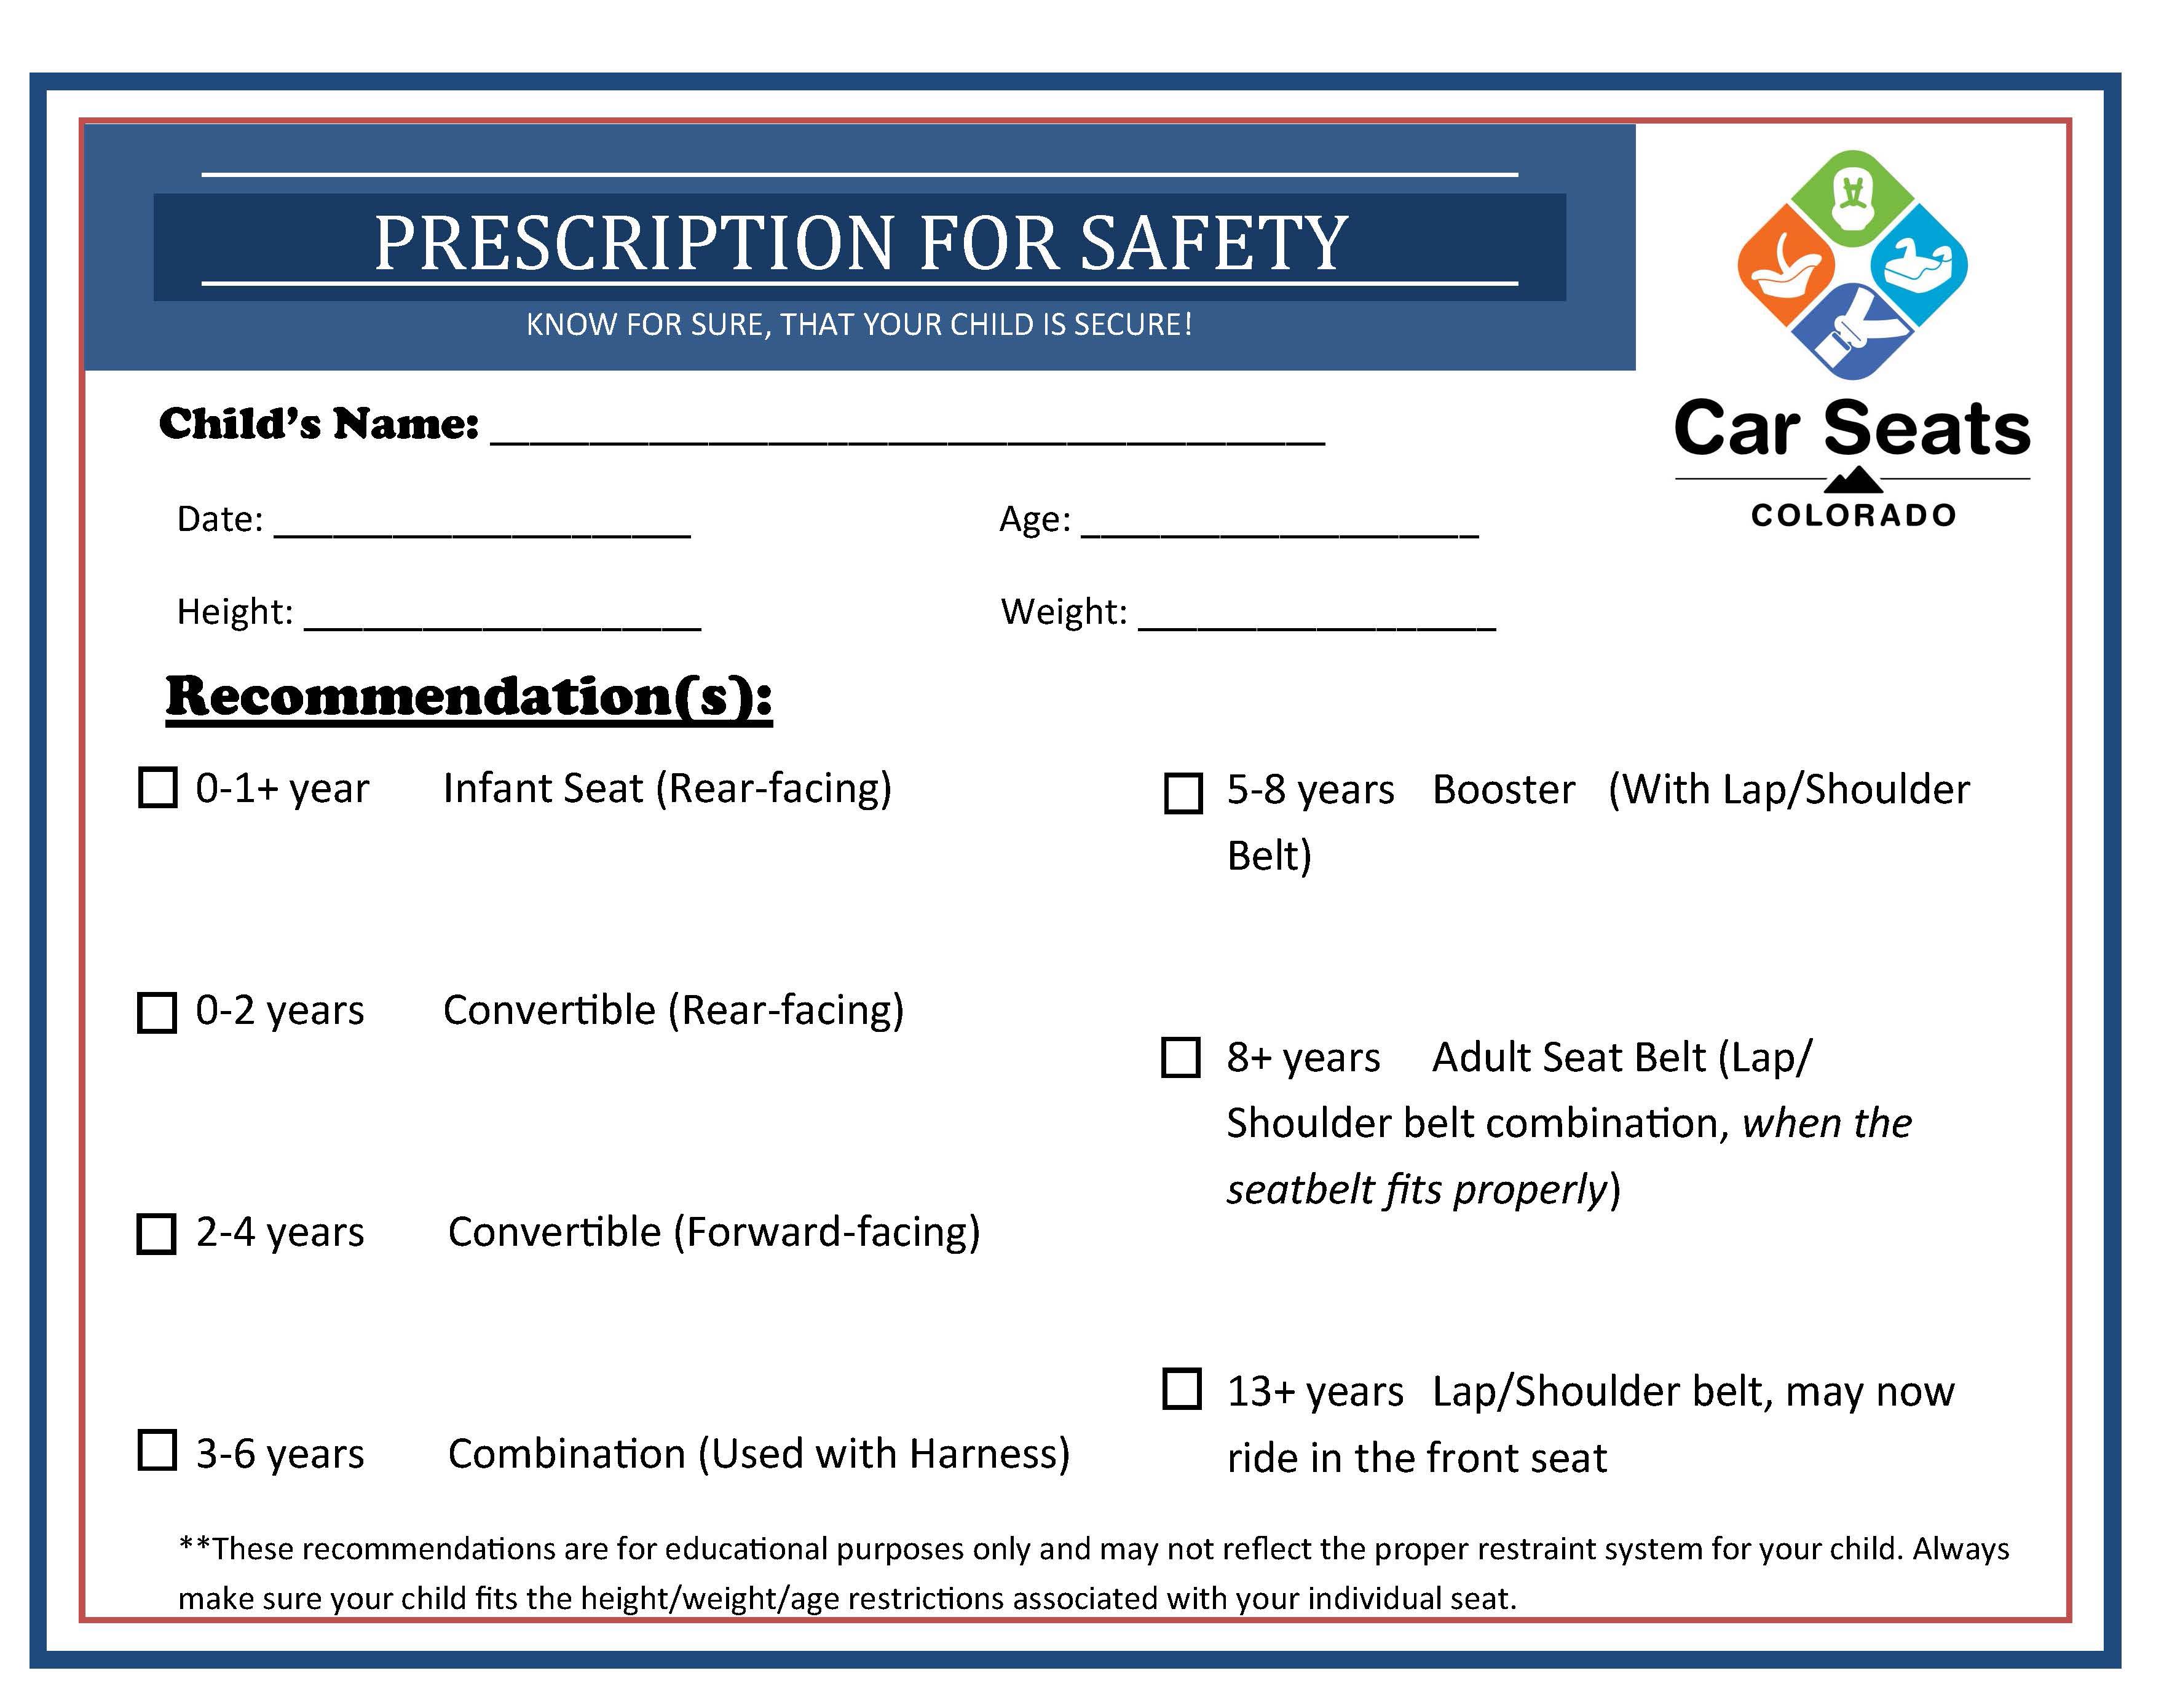 Prescription for Child Safety Cards detail image